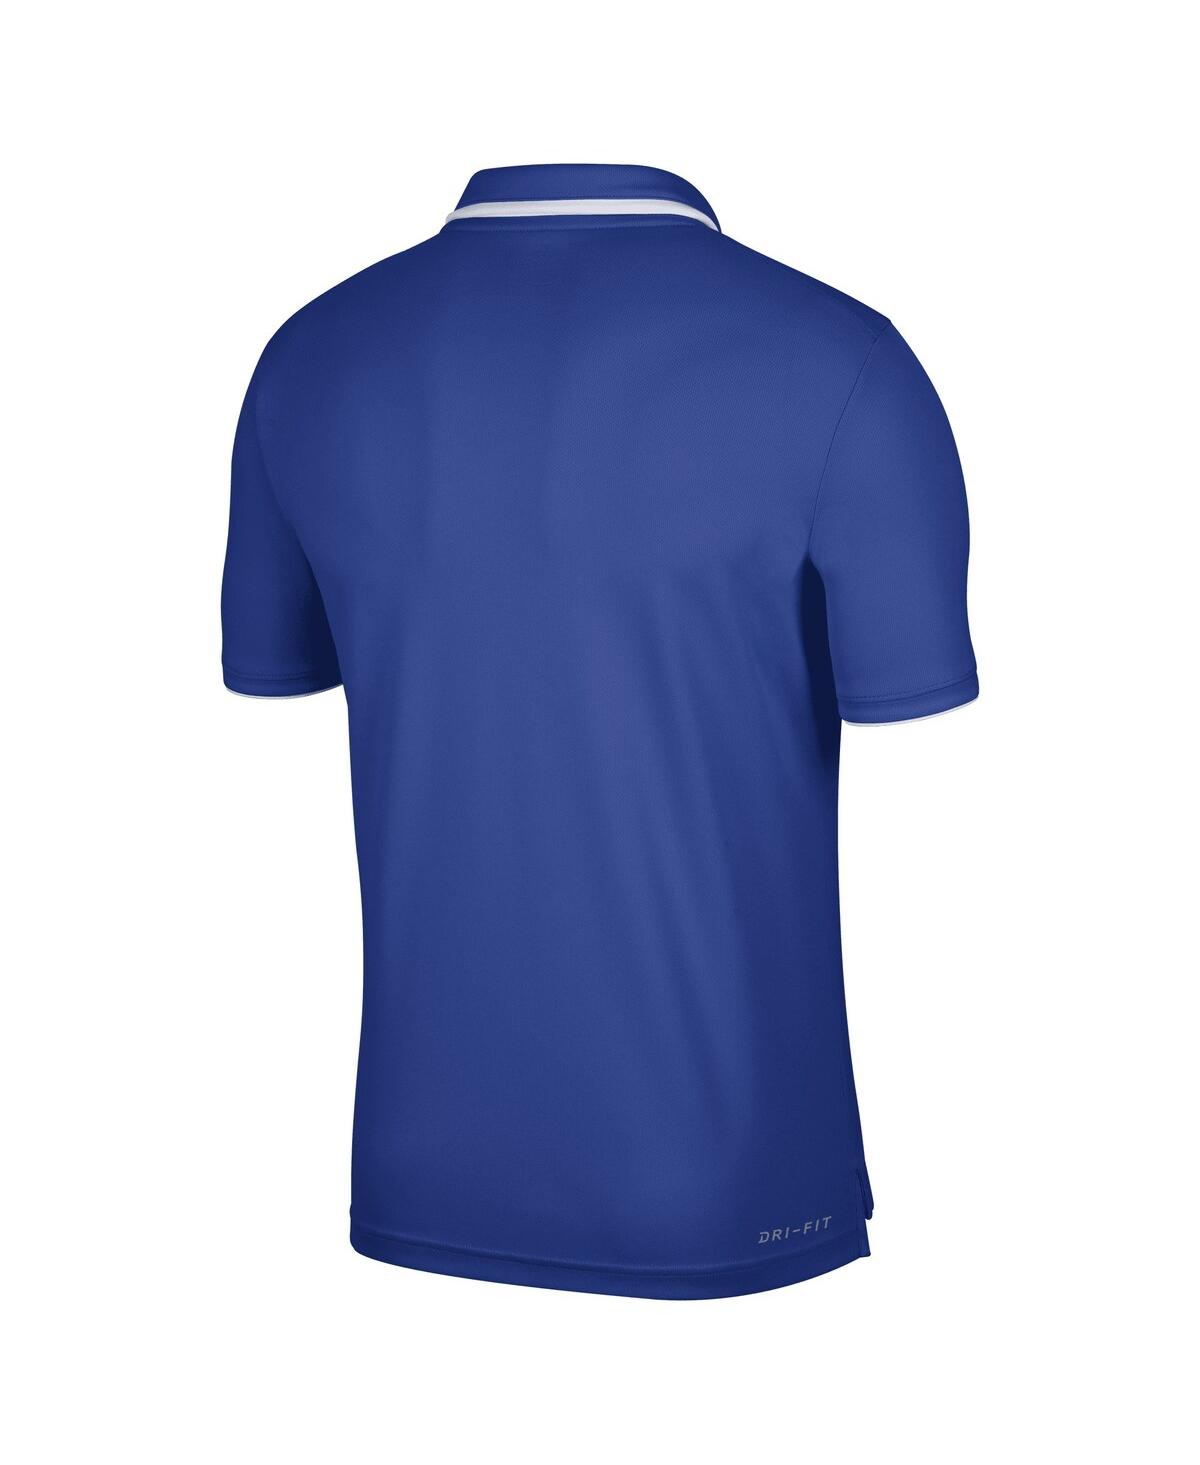 Shop Nike Men's  Royal Duke Blue Devils Wordmark Performance Polo Shirt